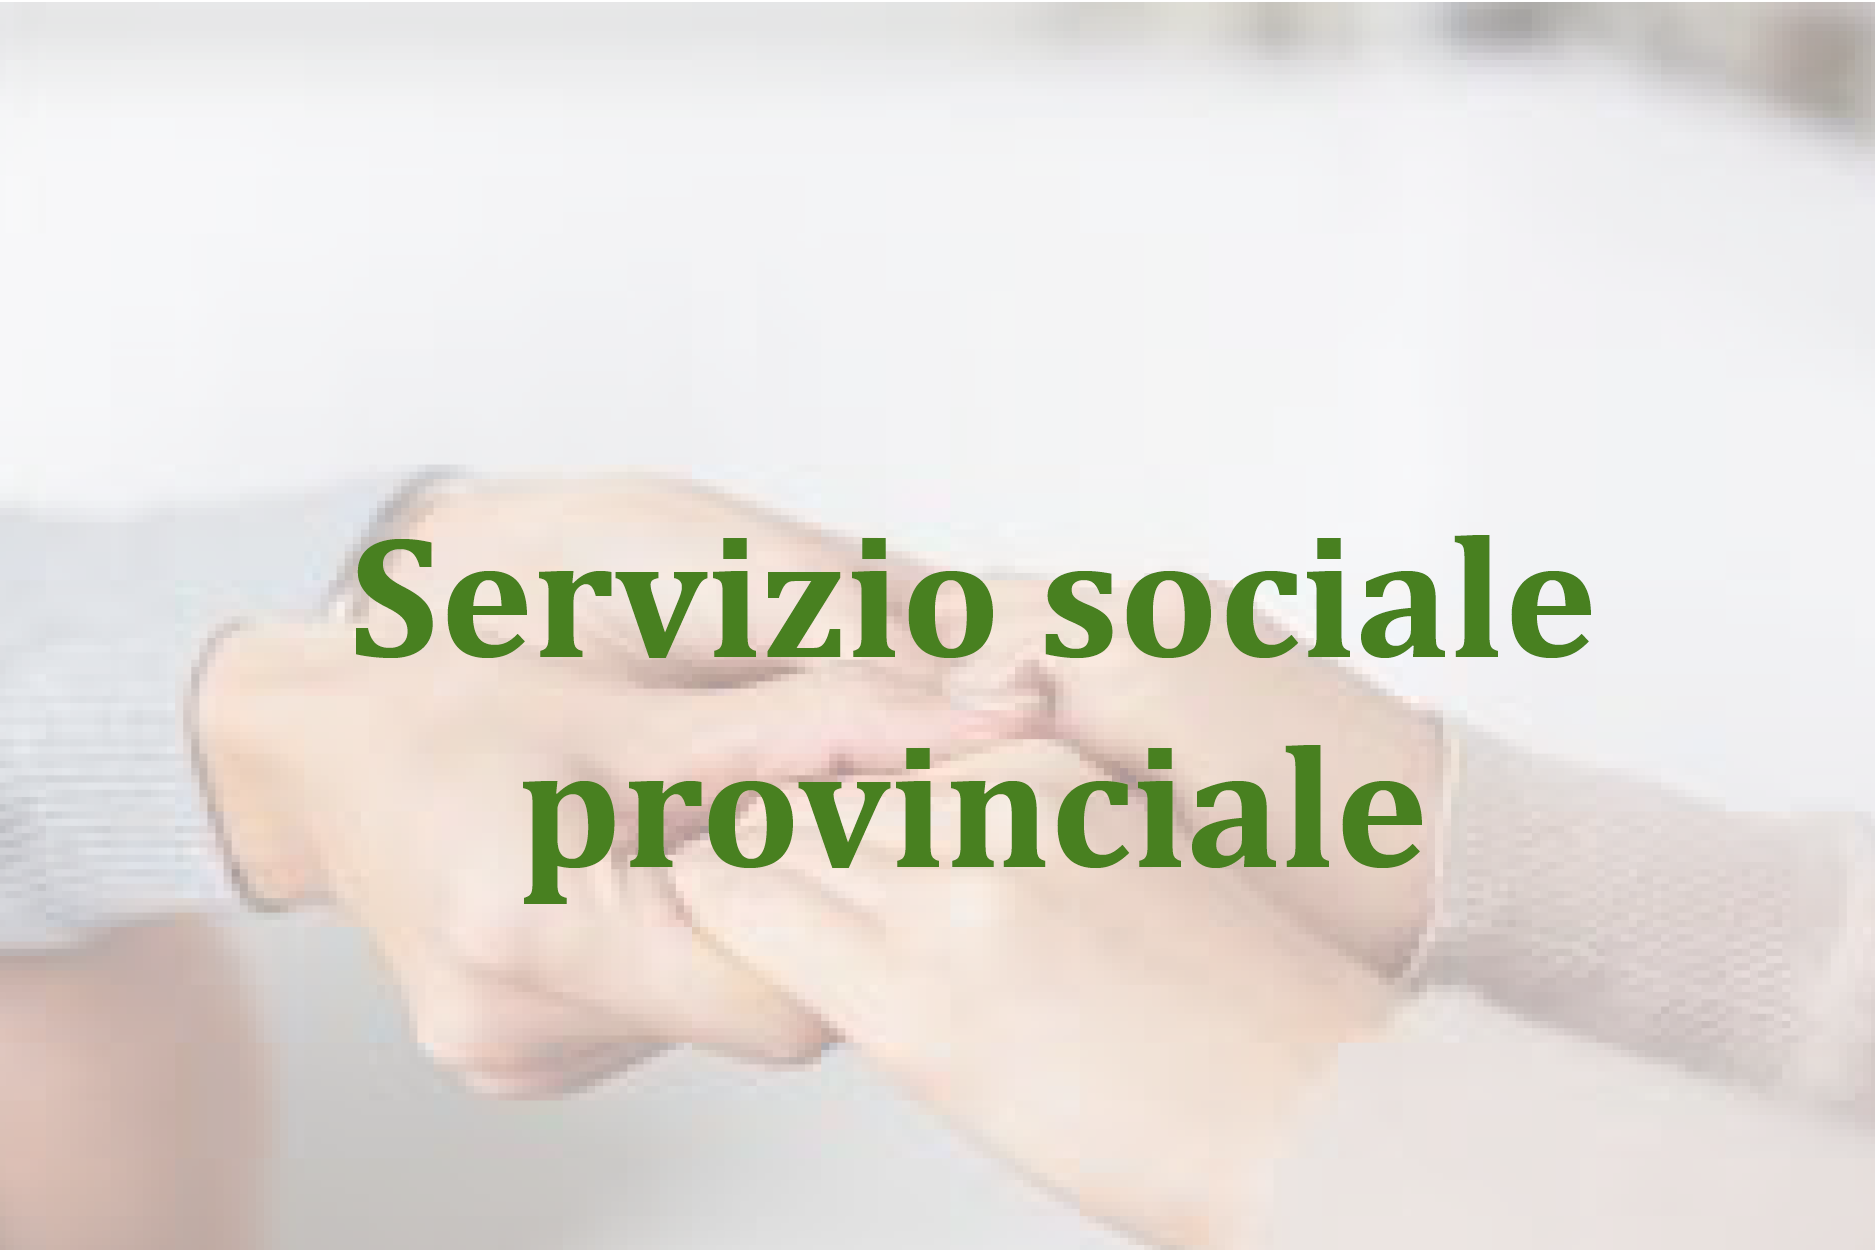 Servizio sociale provinciale.png